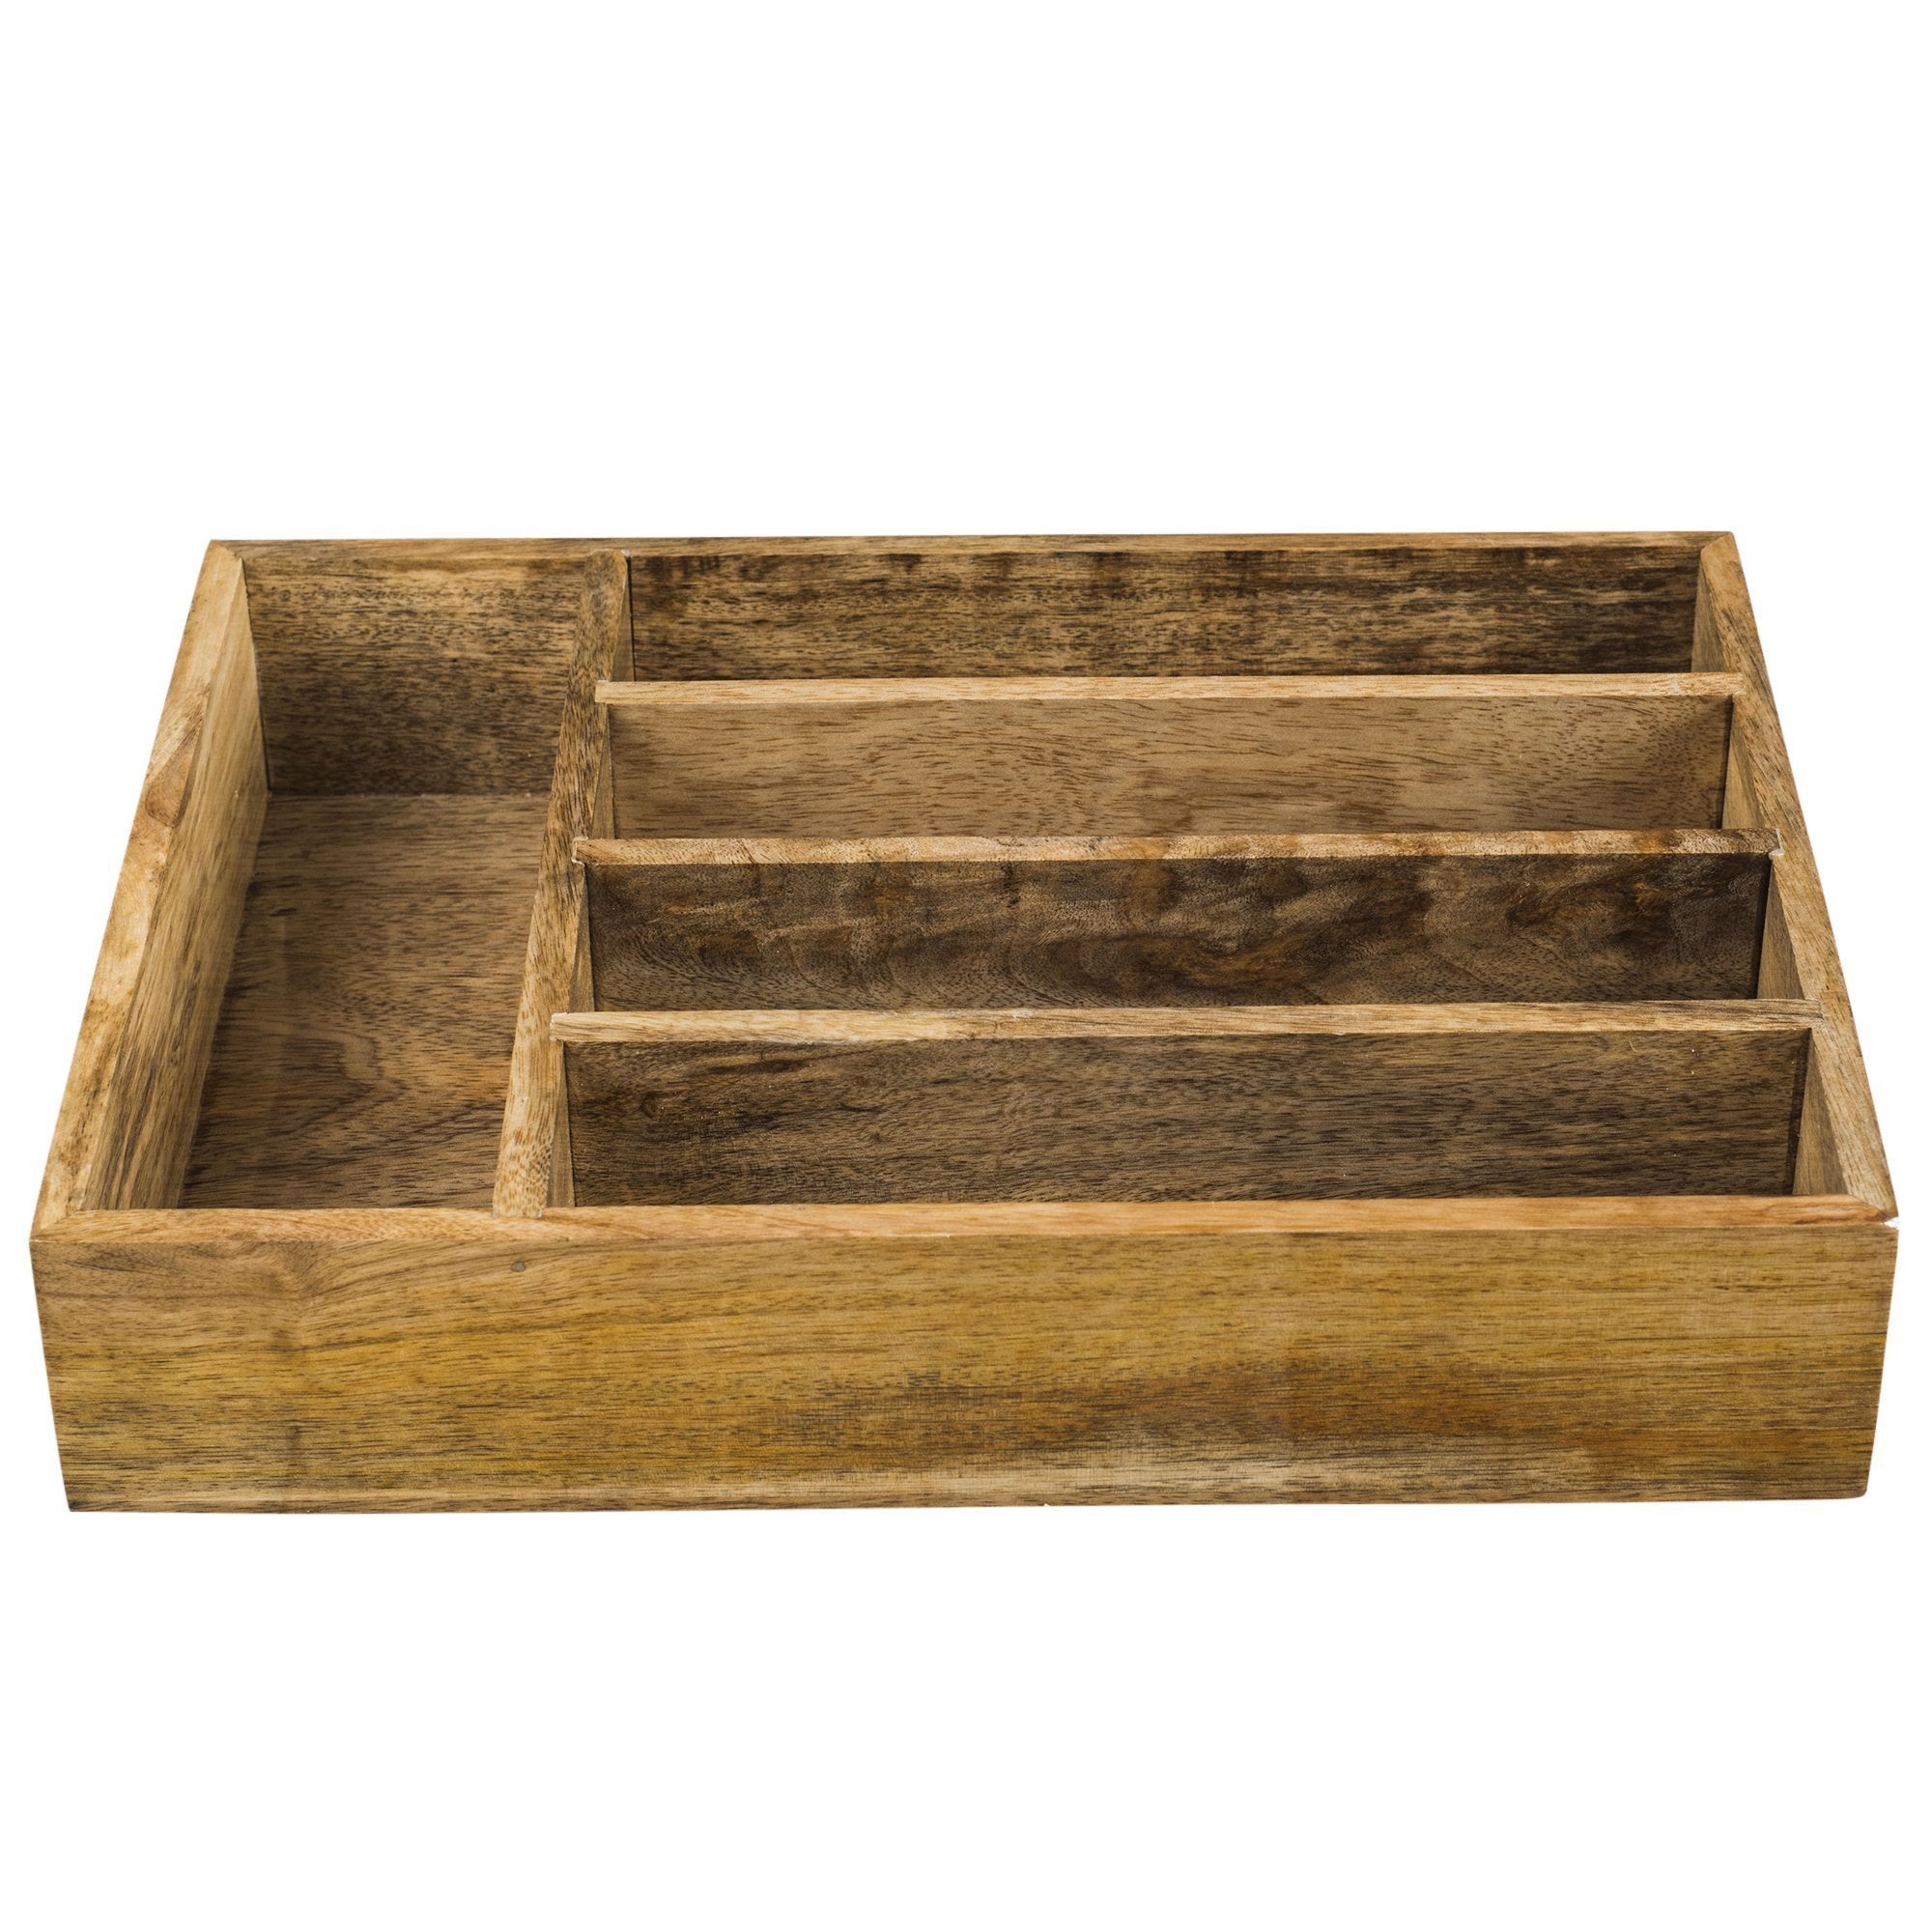 Rusticity Wooden Utensil Drawer Organizer with 5 compartments, Kitchen, Flatware, Cutlery Tray Organizer| Mango Wood | Handmade | (13.7 x 10.2 x 2.6 in)